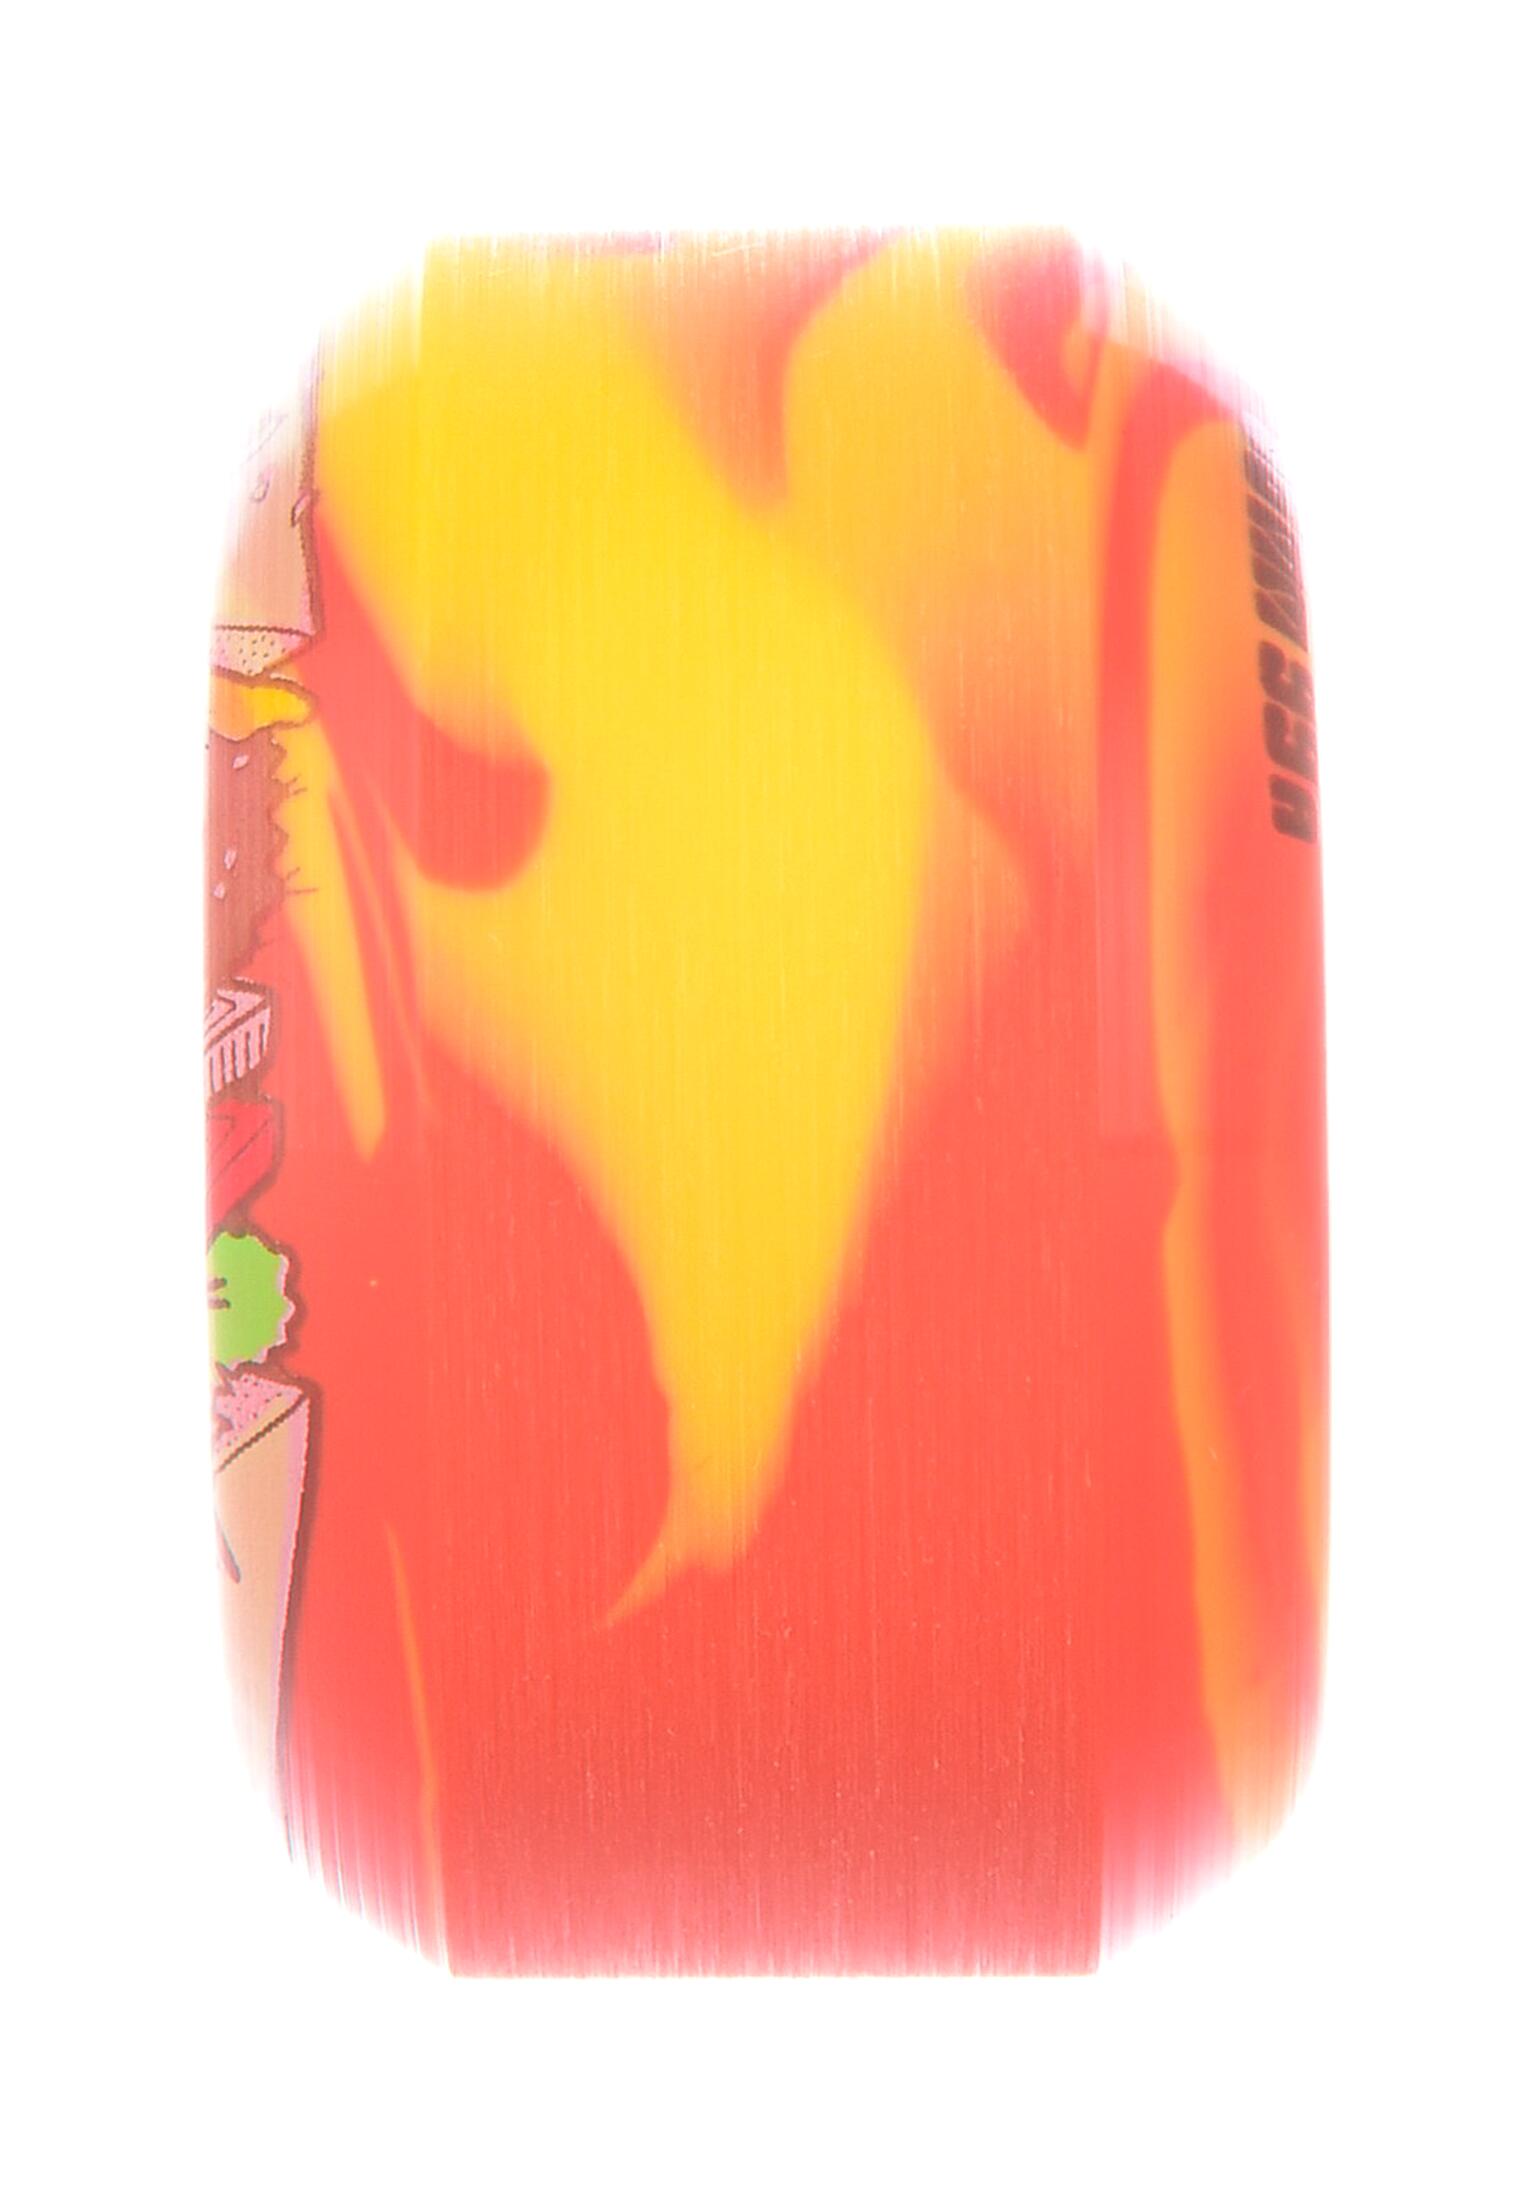 Santa Cruz 56mm Jeremy Fish Burger Speed Balls 99A skateboardwielen red yellow